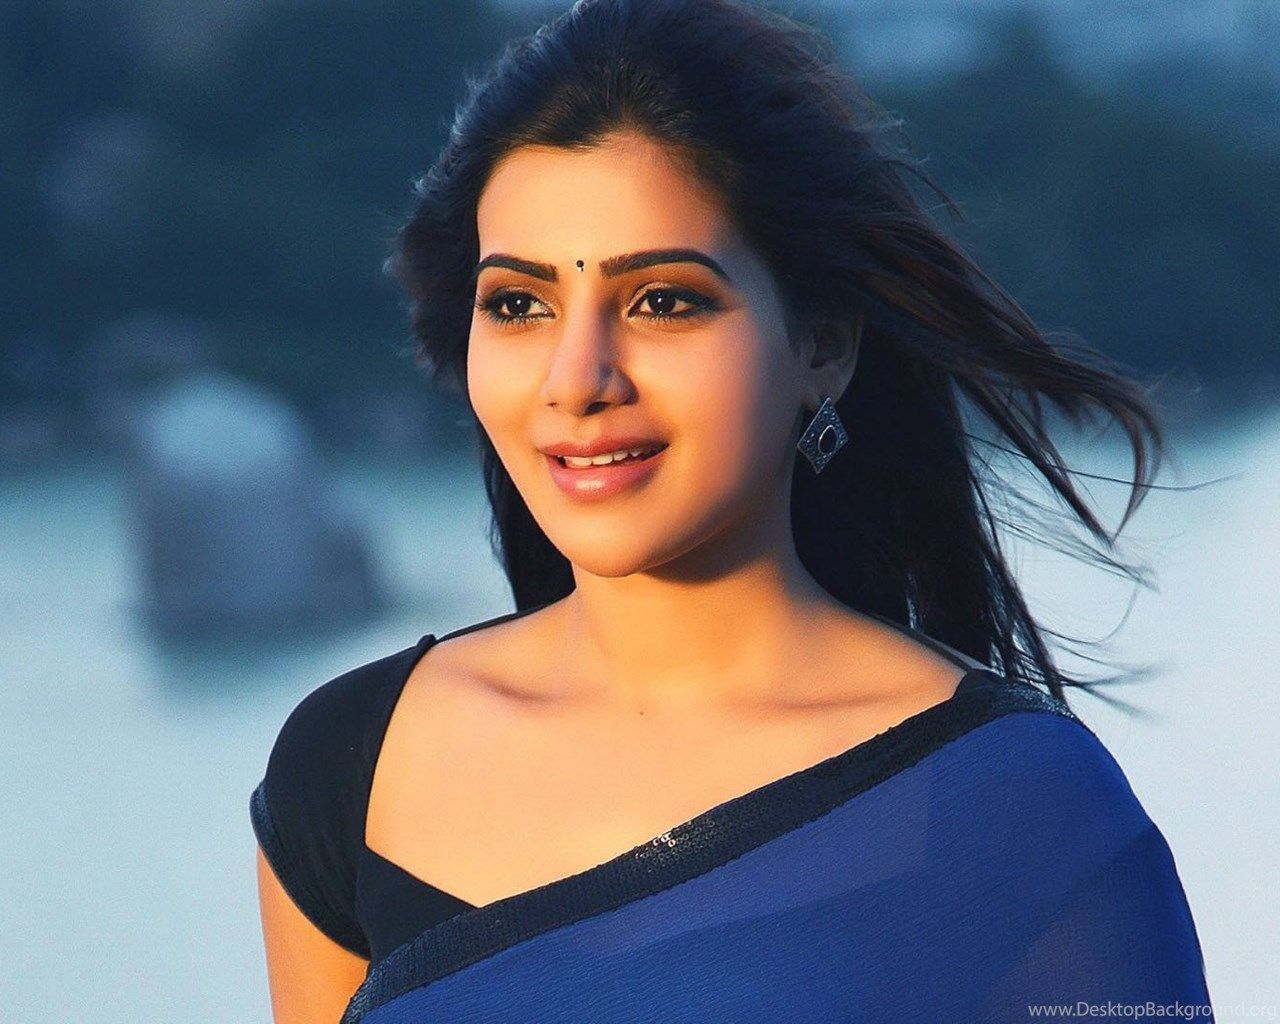 Most Popular South Indian Actresses Wallpaper Desktop Background